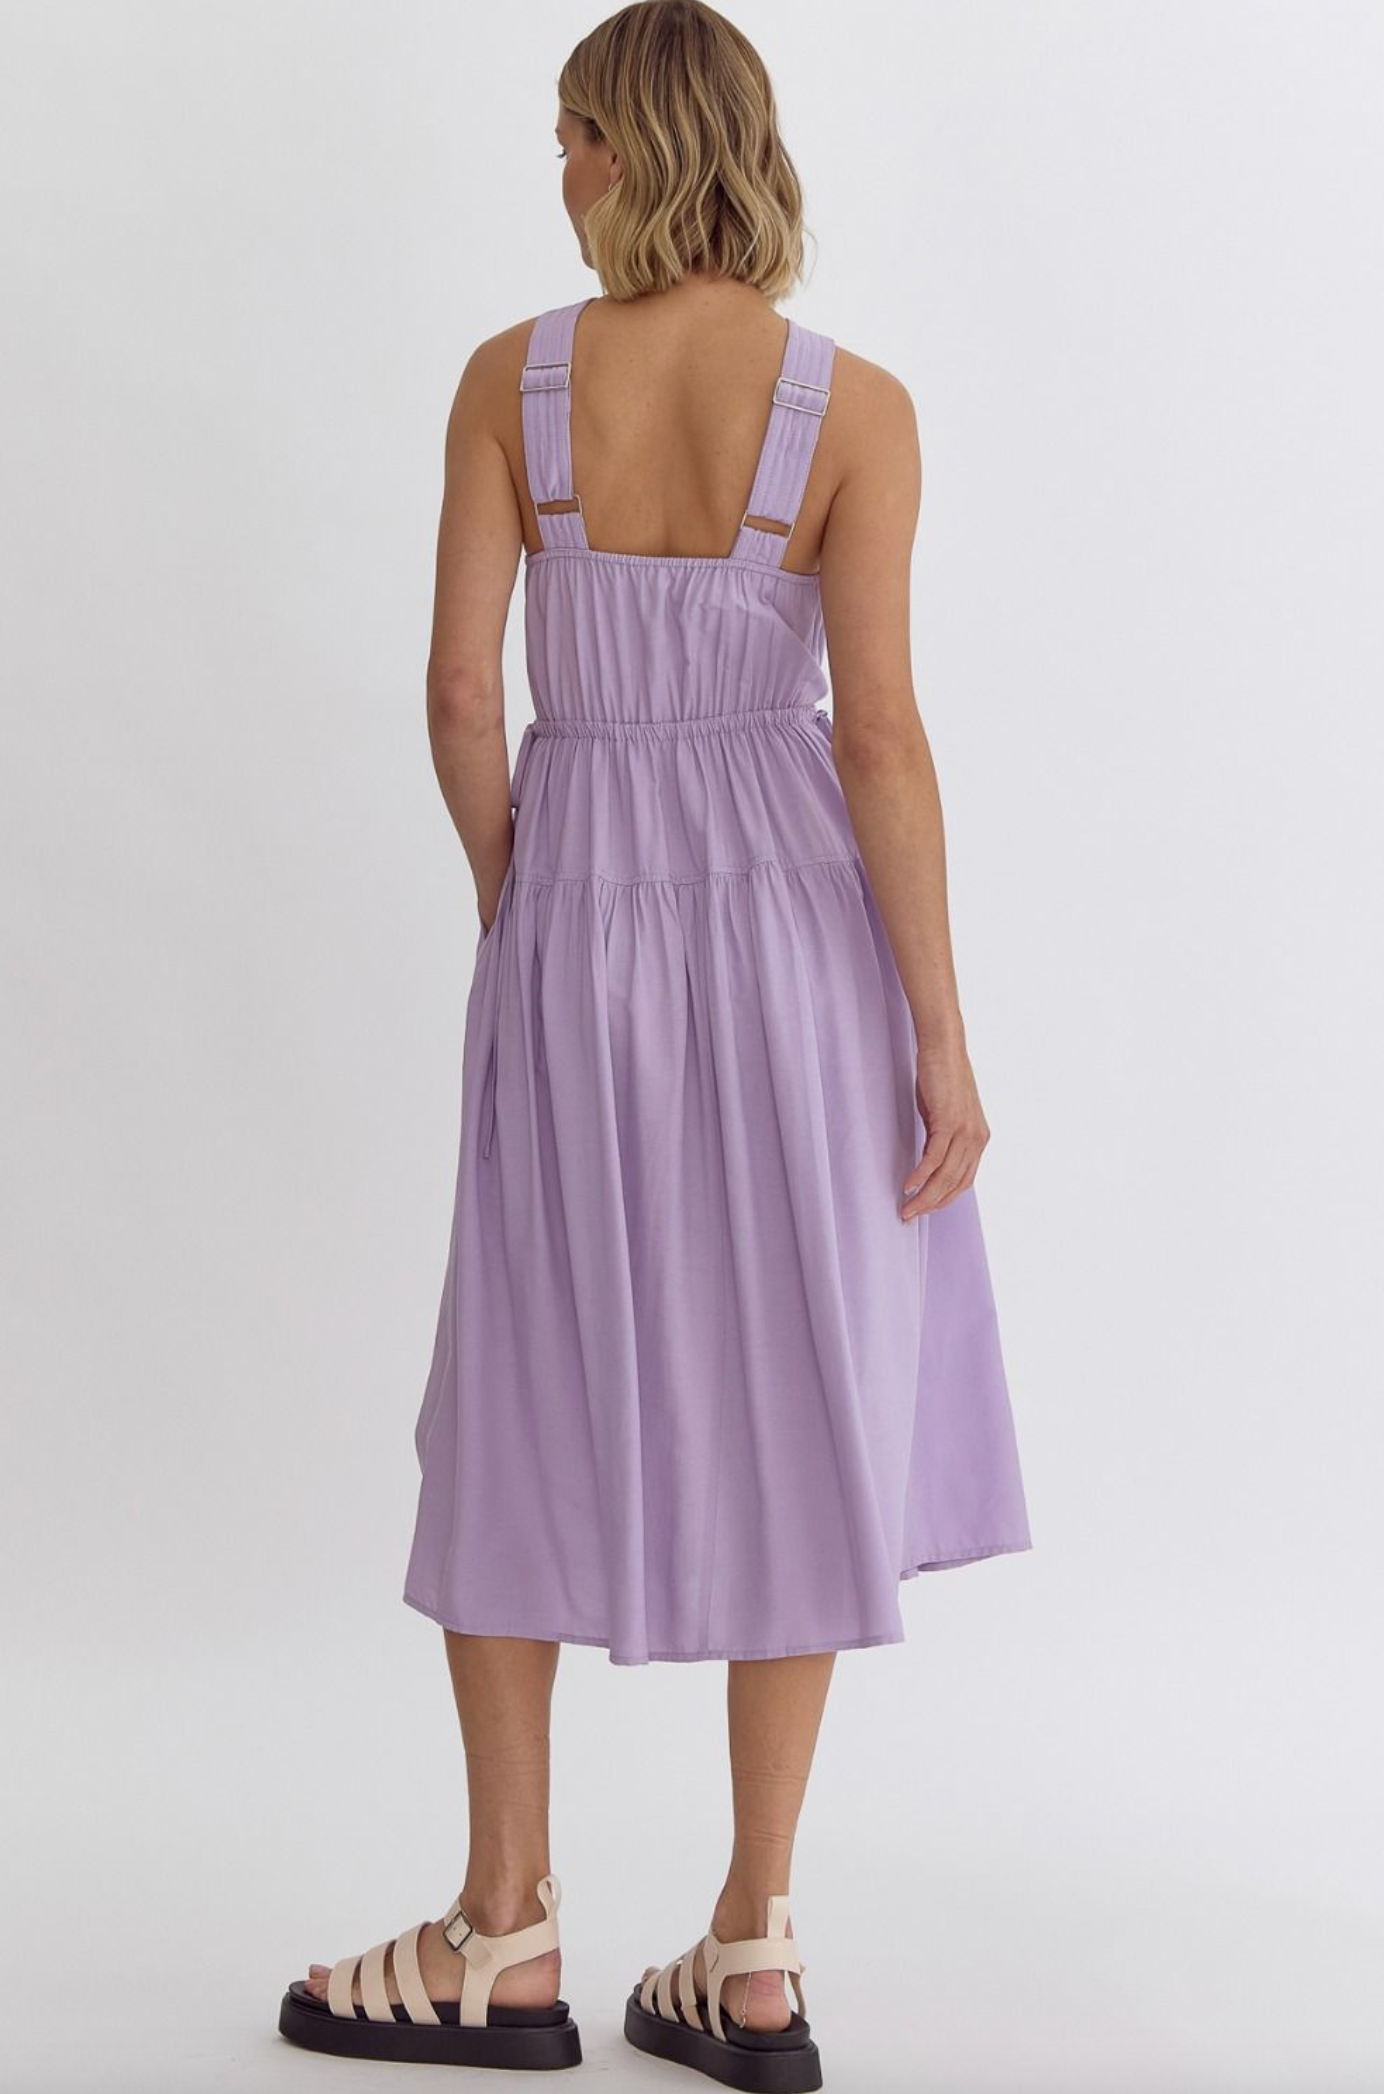 Dress Midi Cinch Lavender Dresses in  at Wrapsody